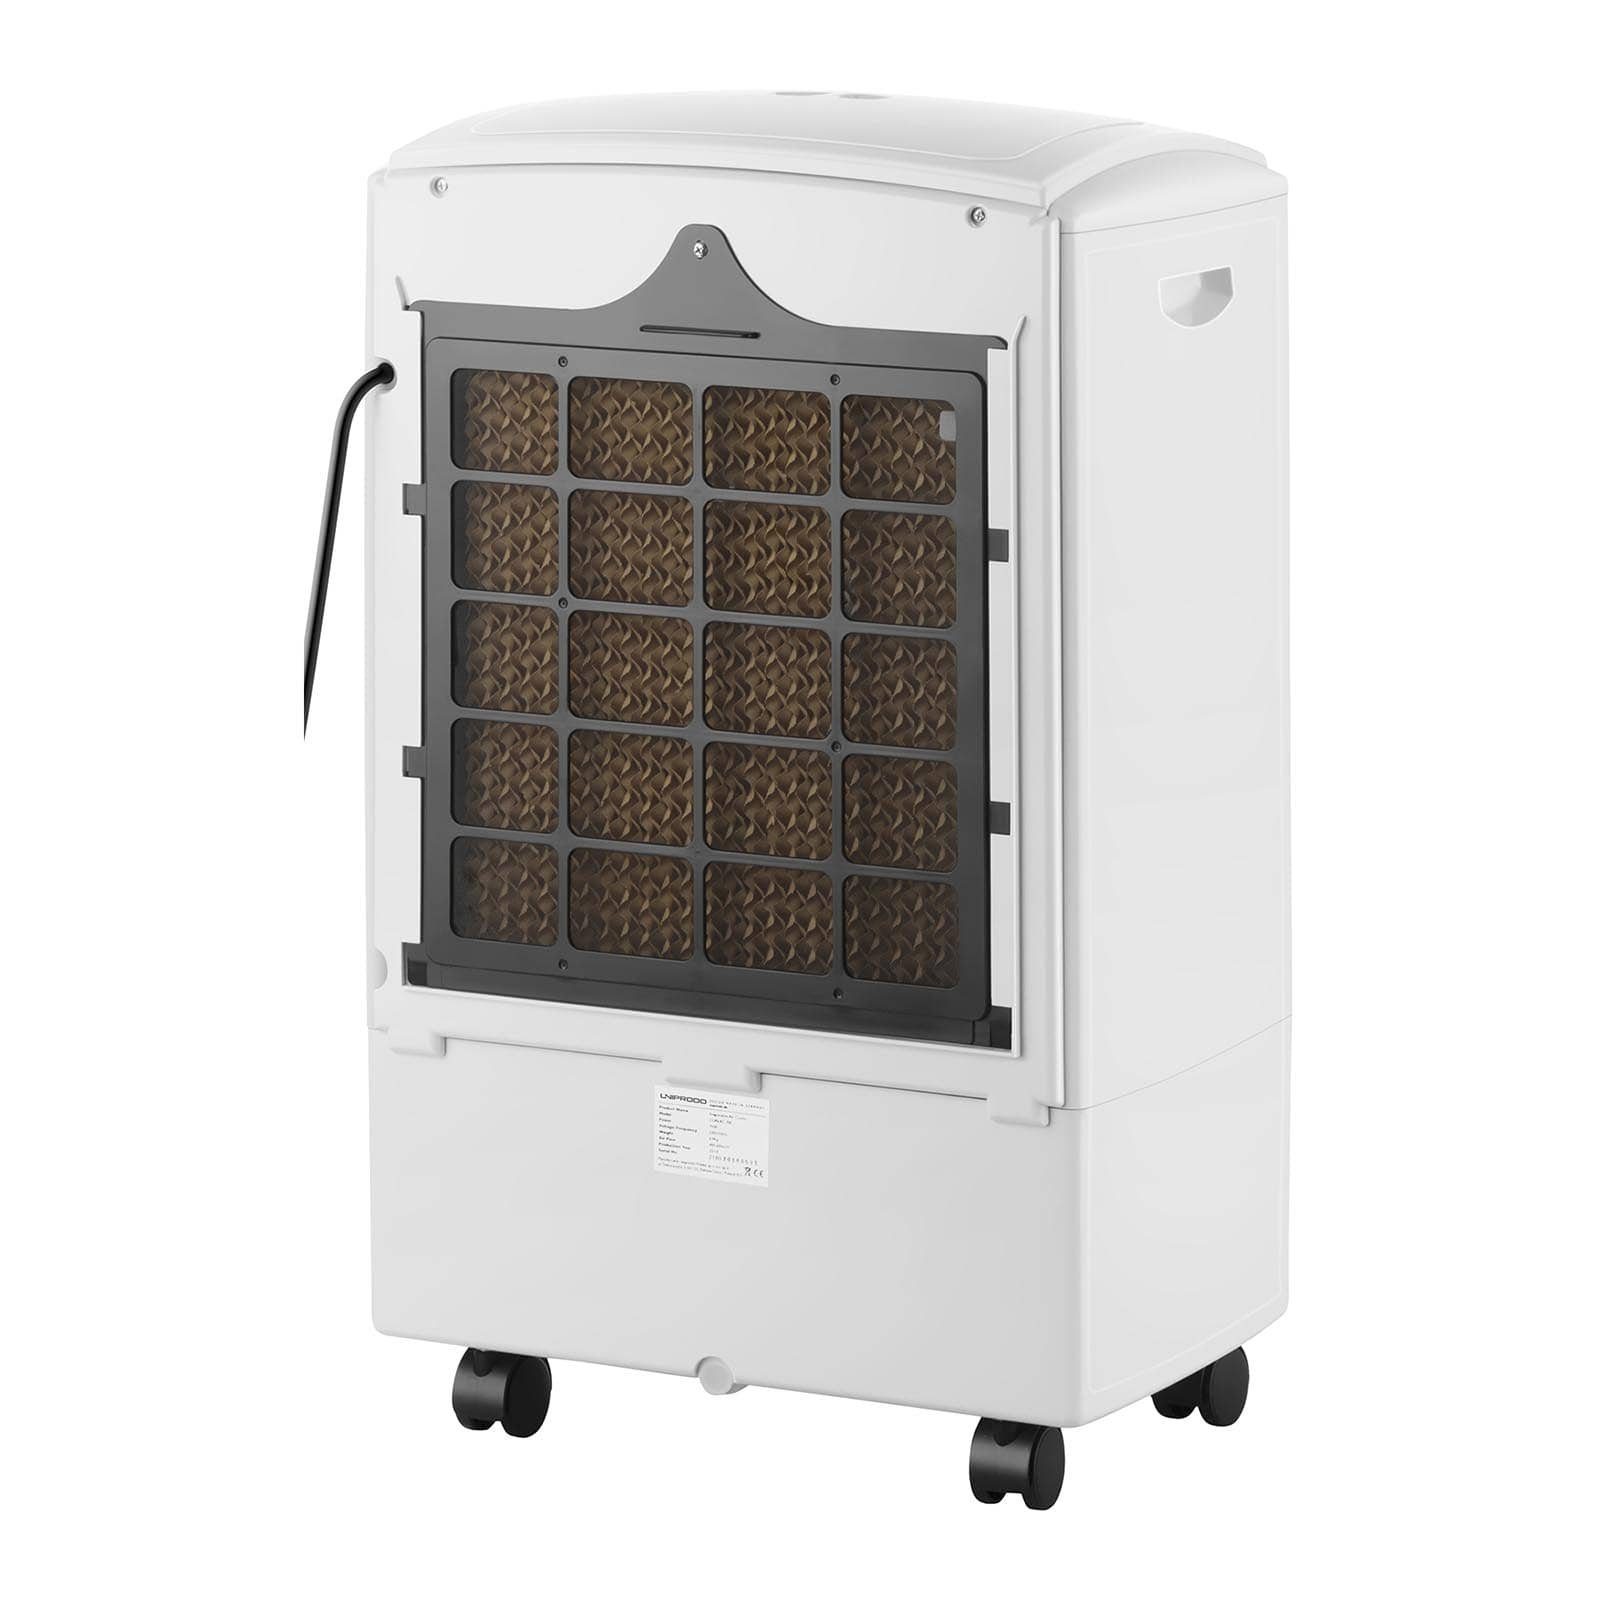 Uniprodo Ventilatorkombigerät Luftkühler Mobil Wassertank Klimagerät - 10 3 1 In Luftreiniger - L